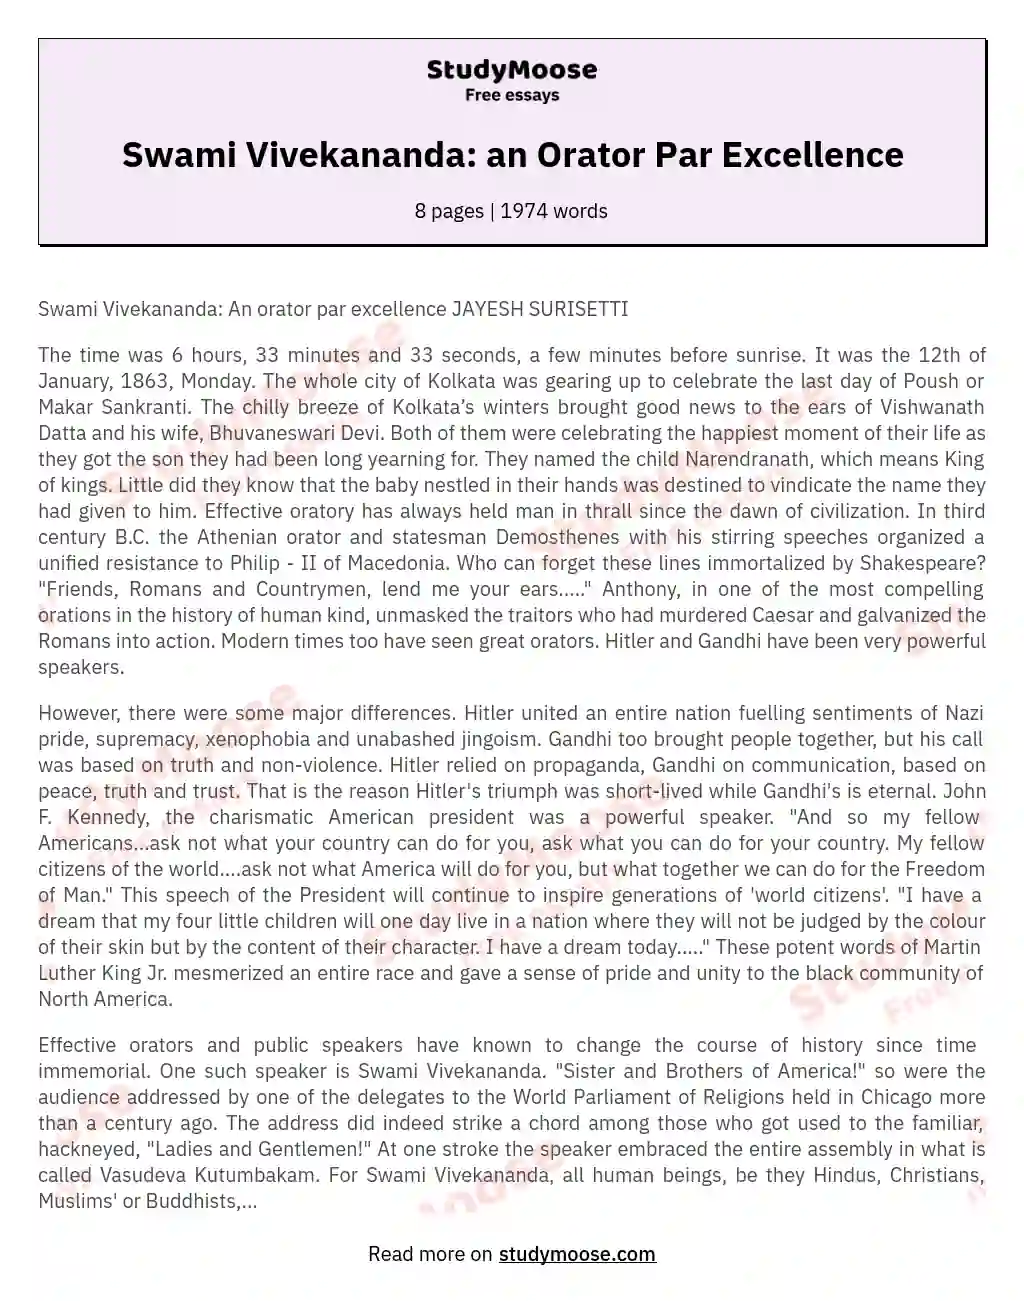 Swami Vivekananda: an Orator Par Excellence essay